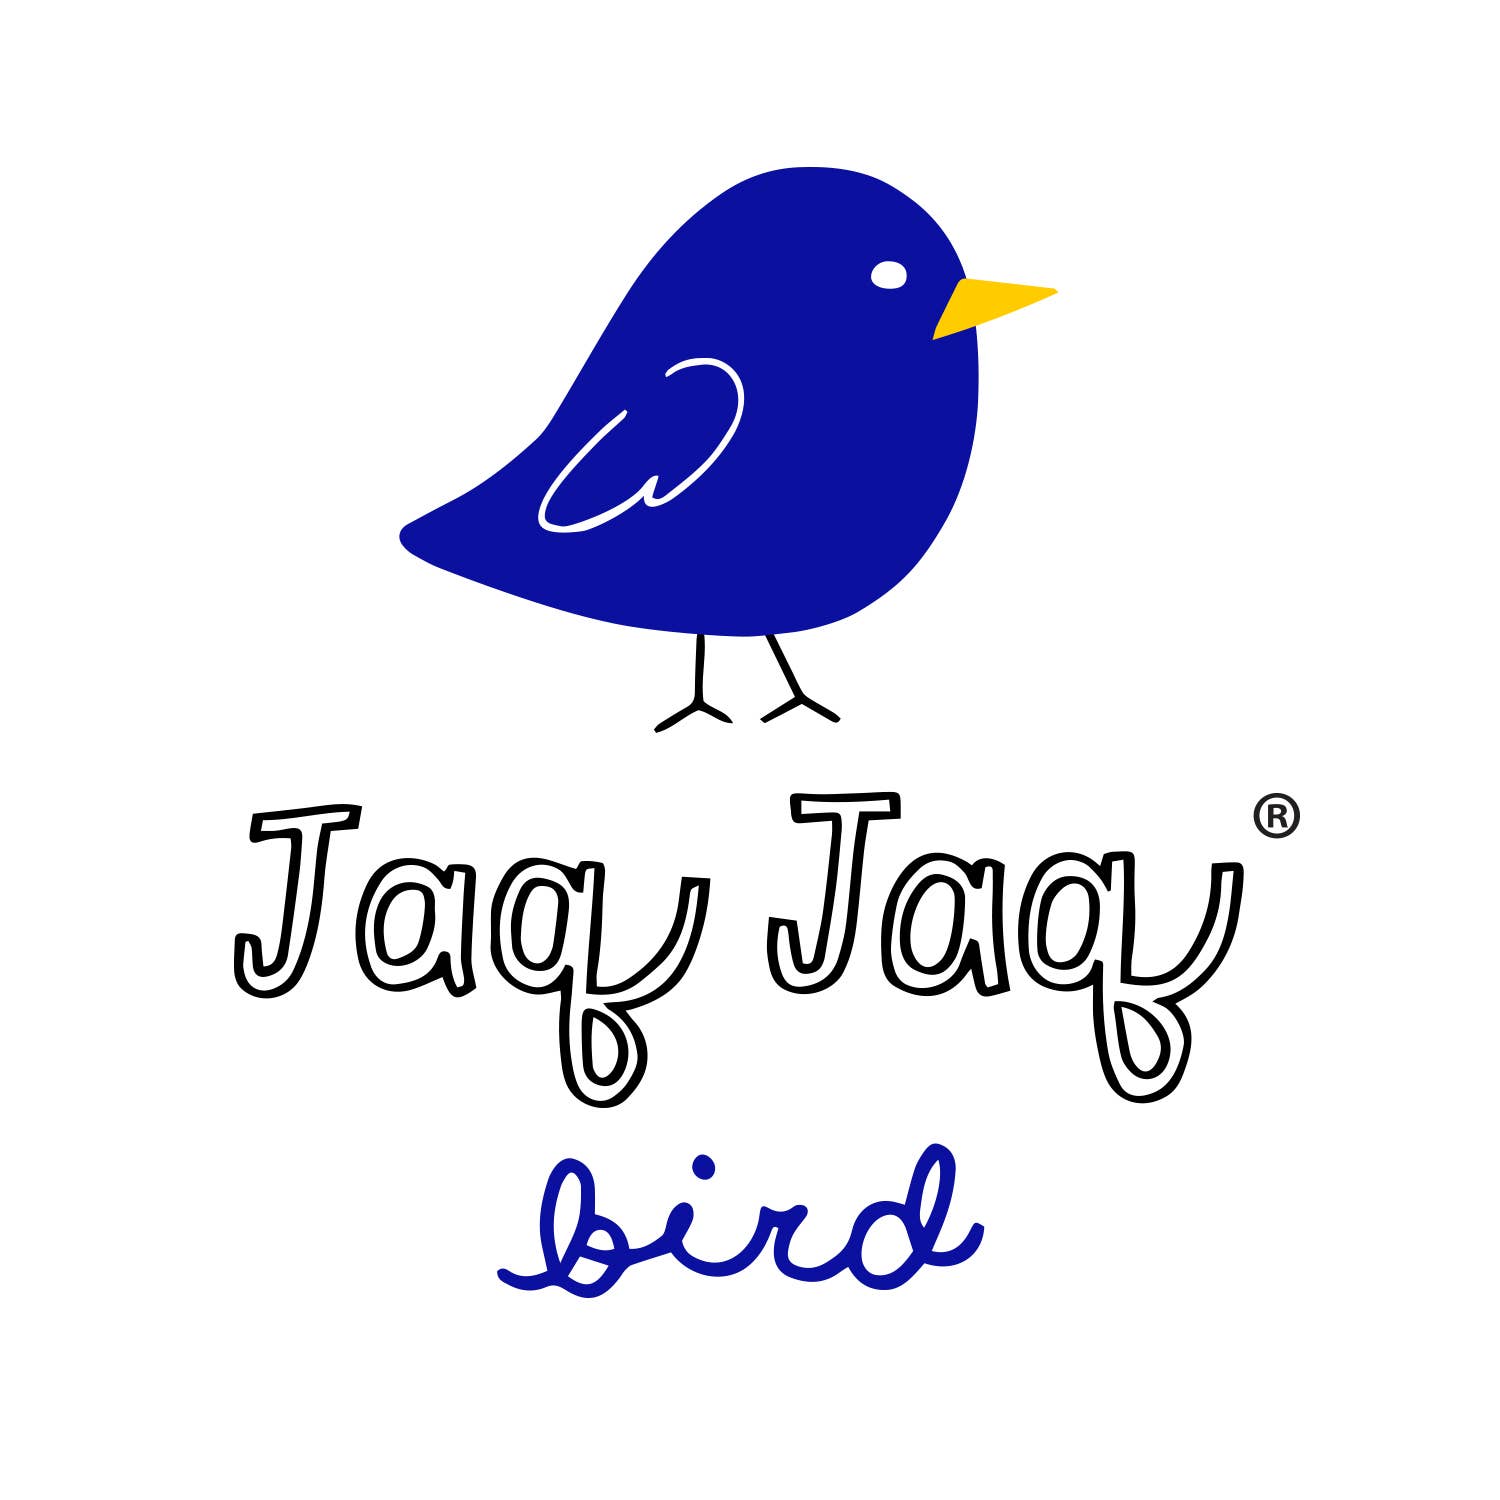 Washable Dry Erase and Window Markers 9 pcs – Jaq Jaq Bird